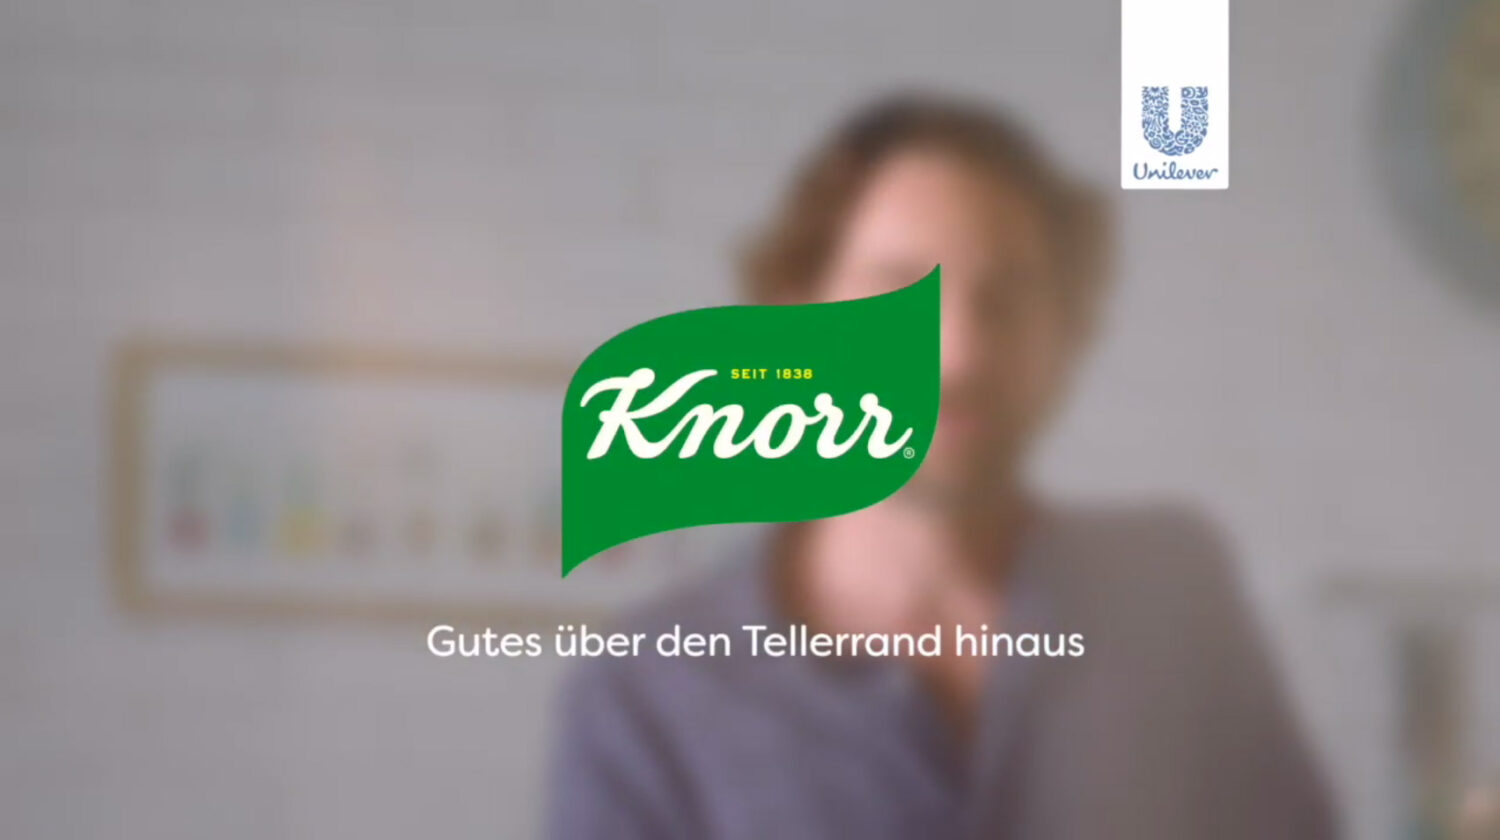 Knorr Visual (2019), Quelle: Unilever